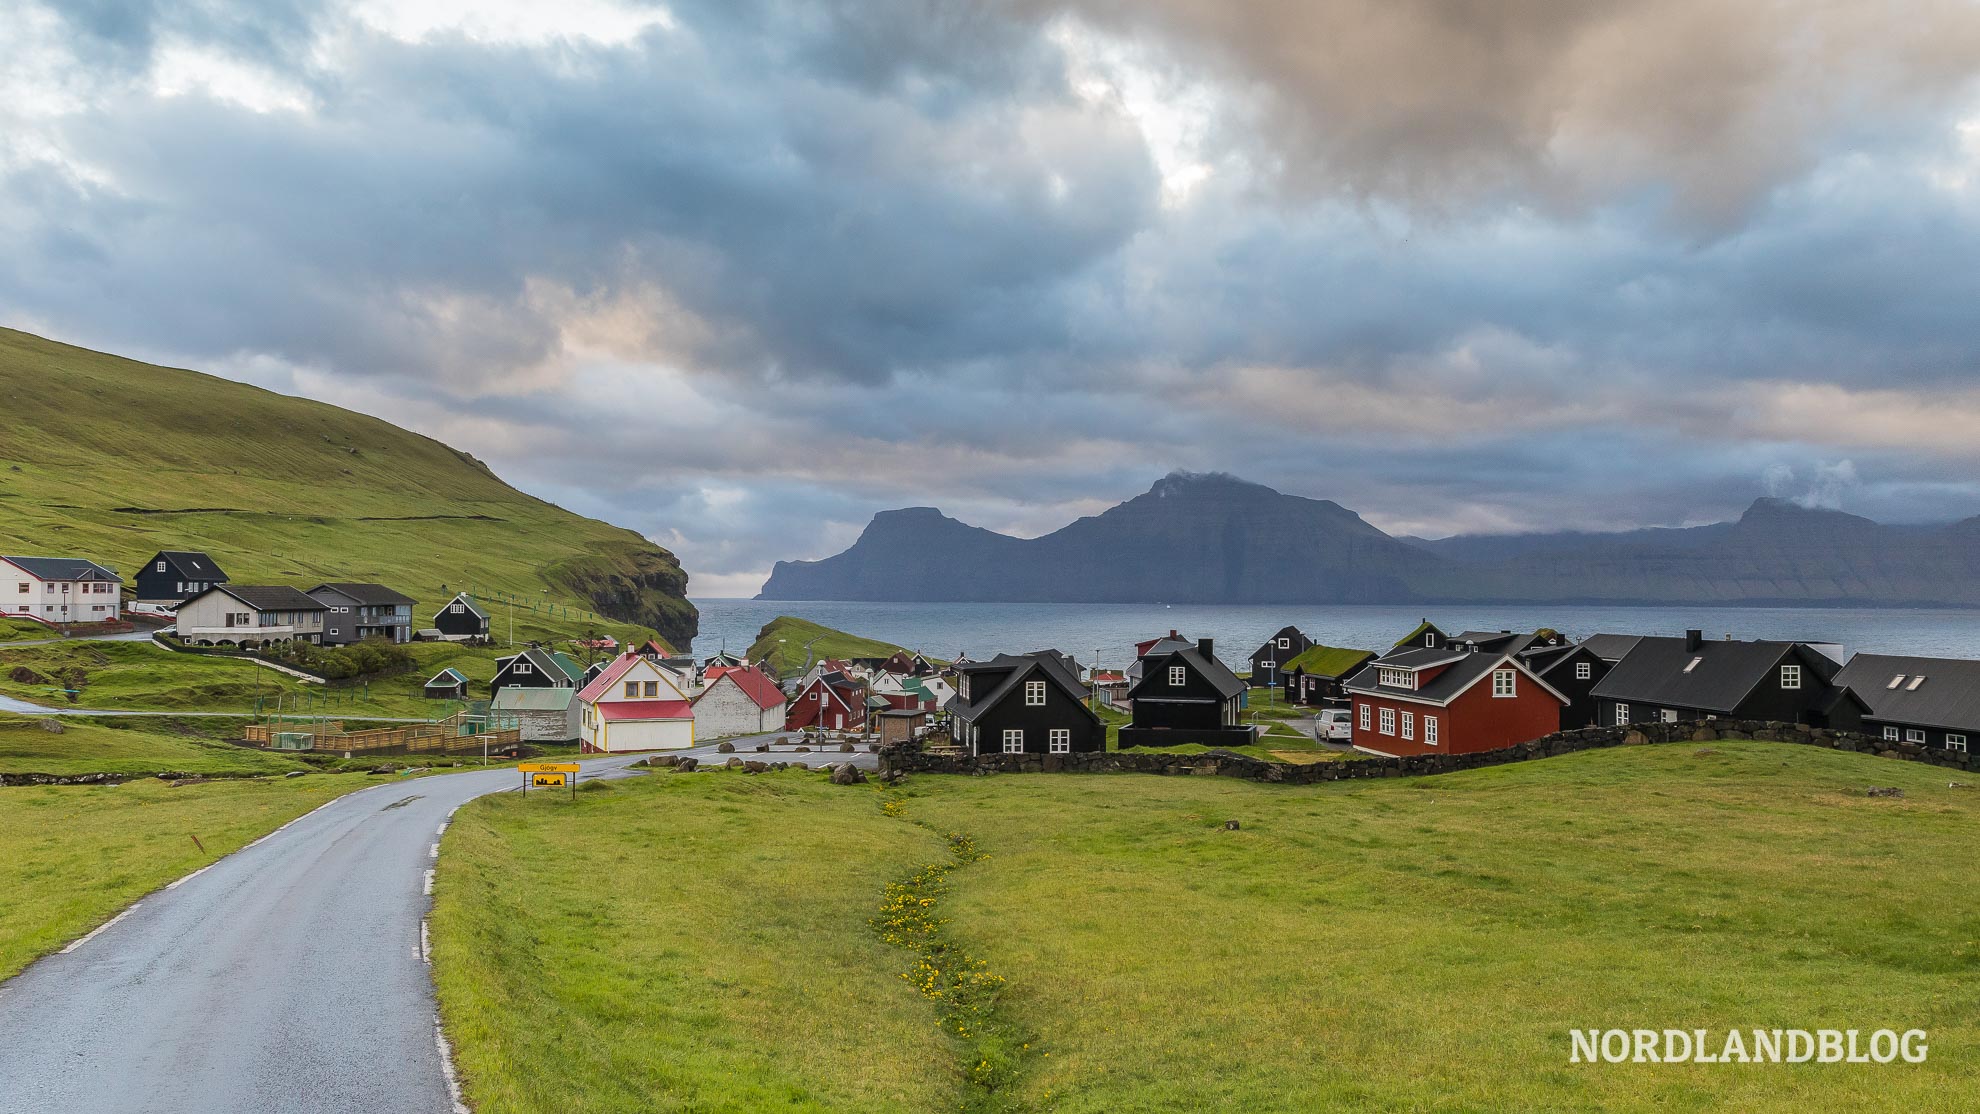 Ortseingang vom Dorf Gjógv auf den Färöer Inseln (Nordlandblog)